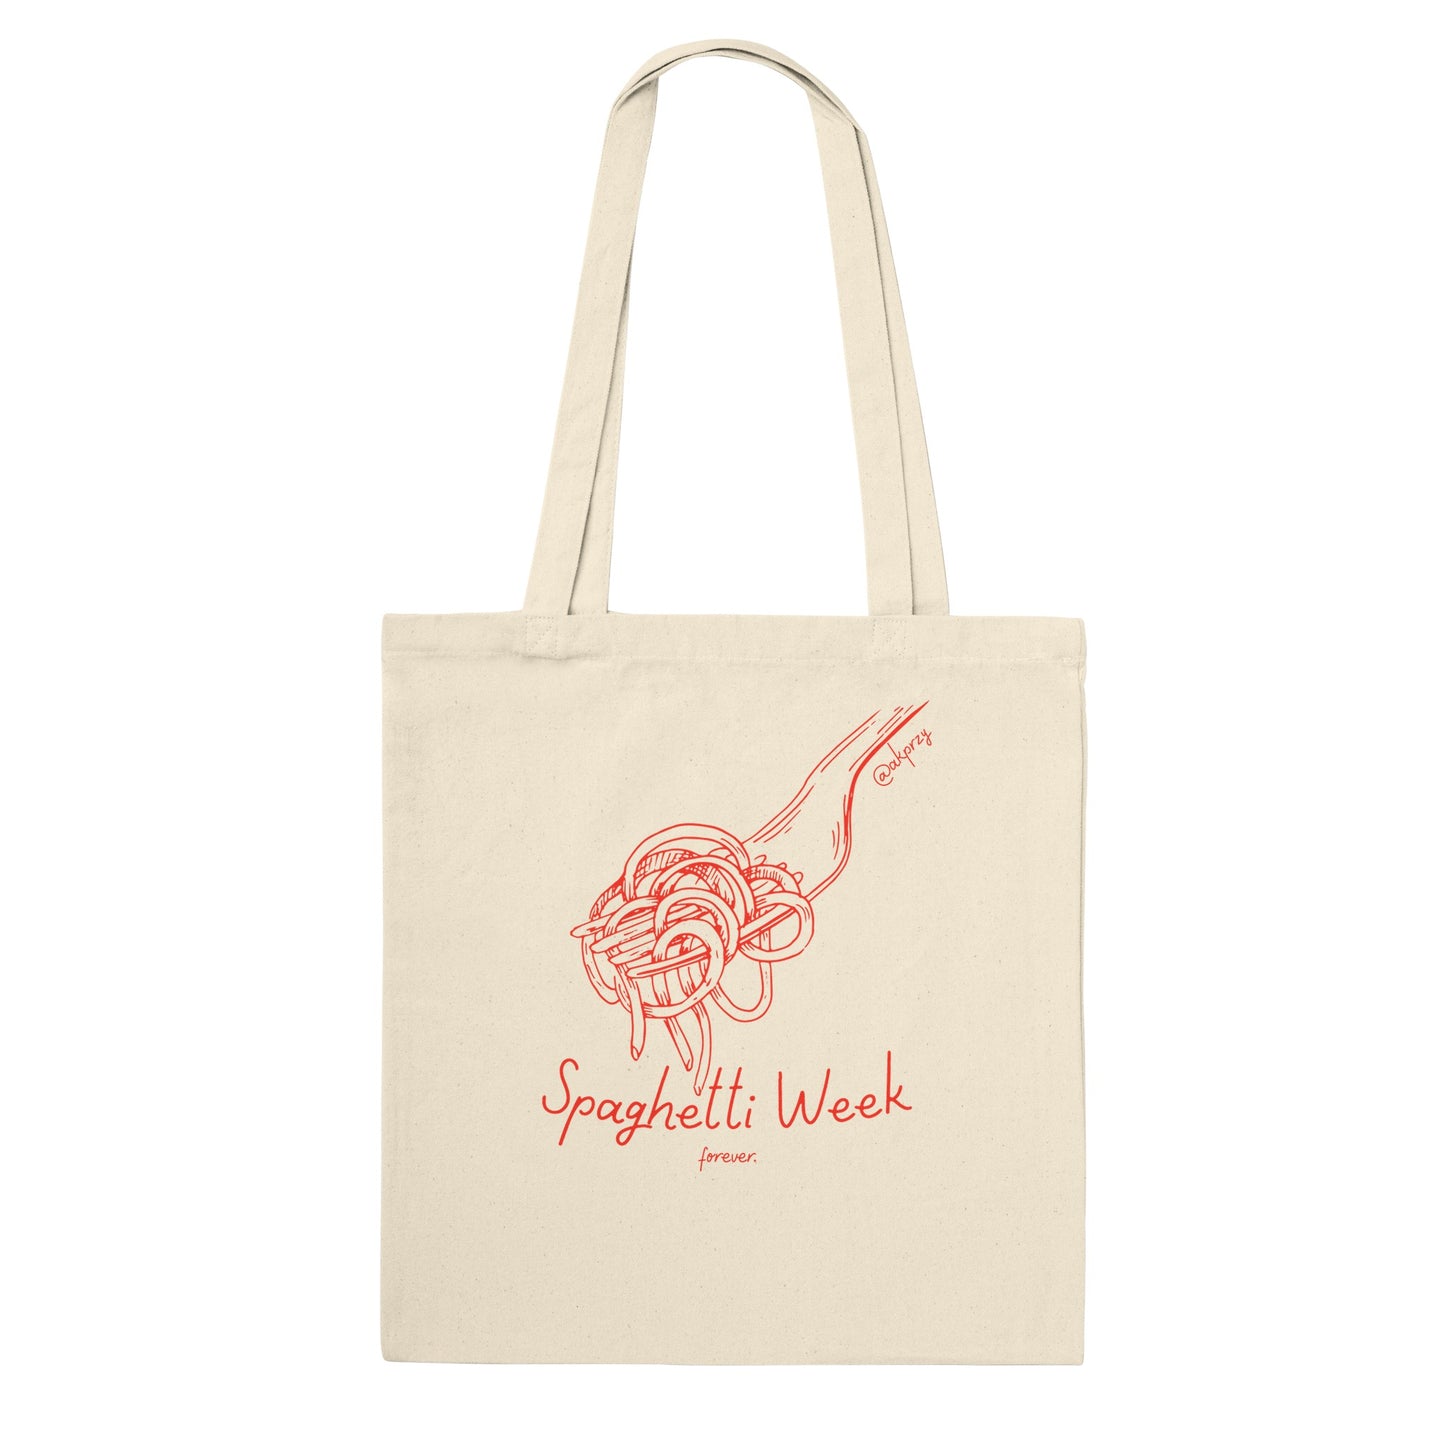 Premium Tote Bag - Spaghetti Week